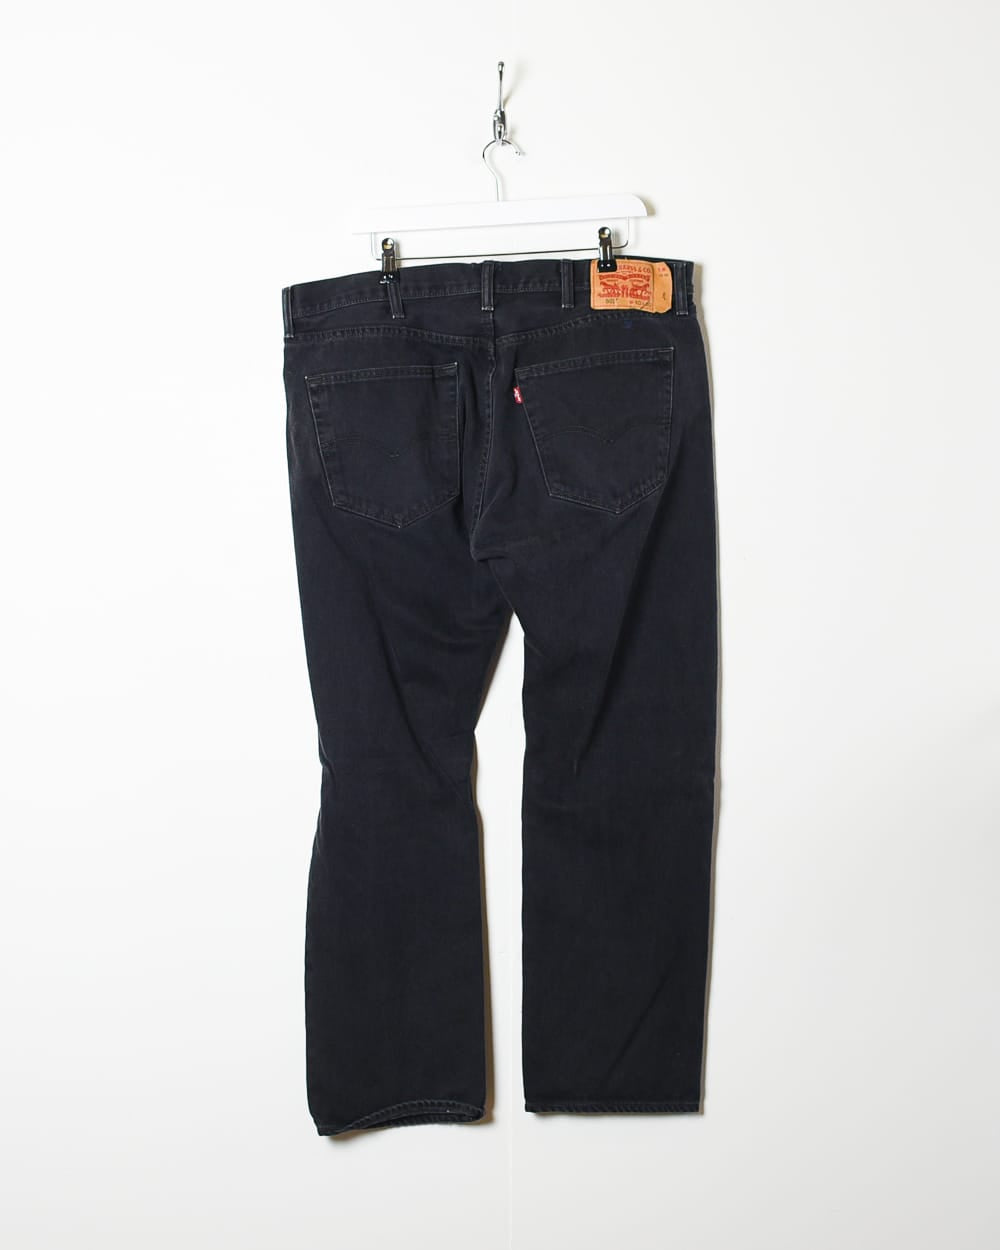 Black Levi's 501 Jeans - W40 L30